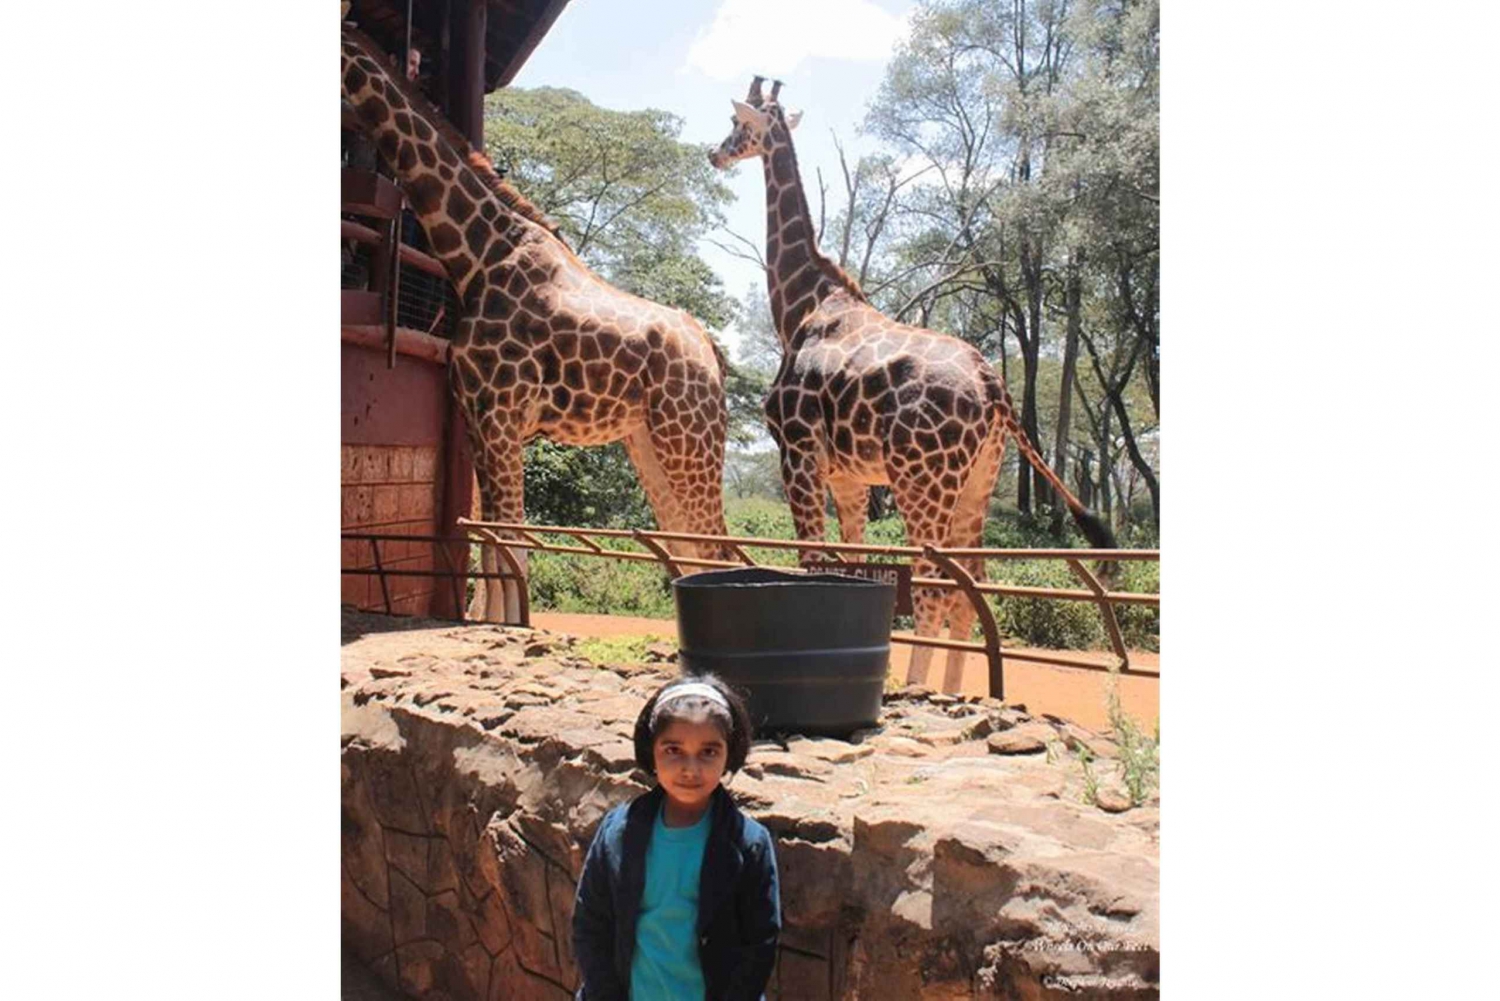 Visite du centre des girafes et du musée Karen Blixen depuis Nairobi